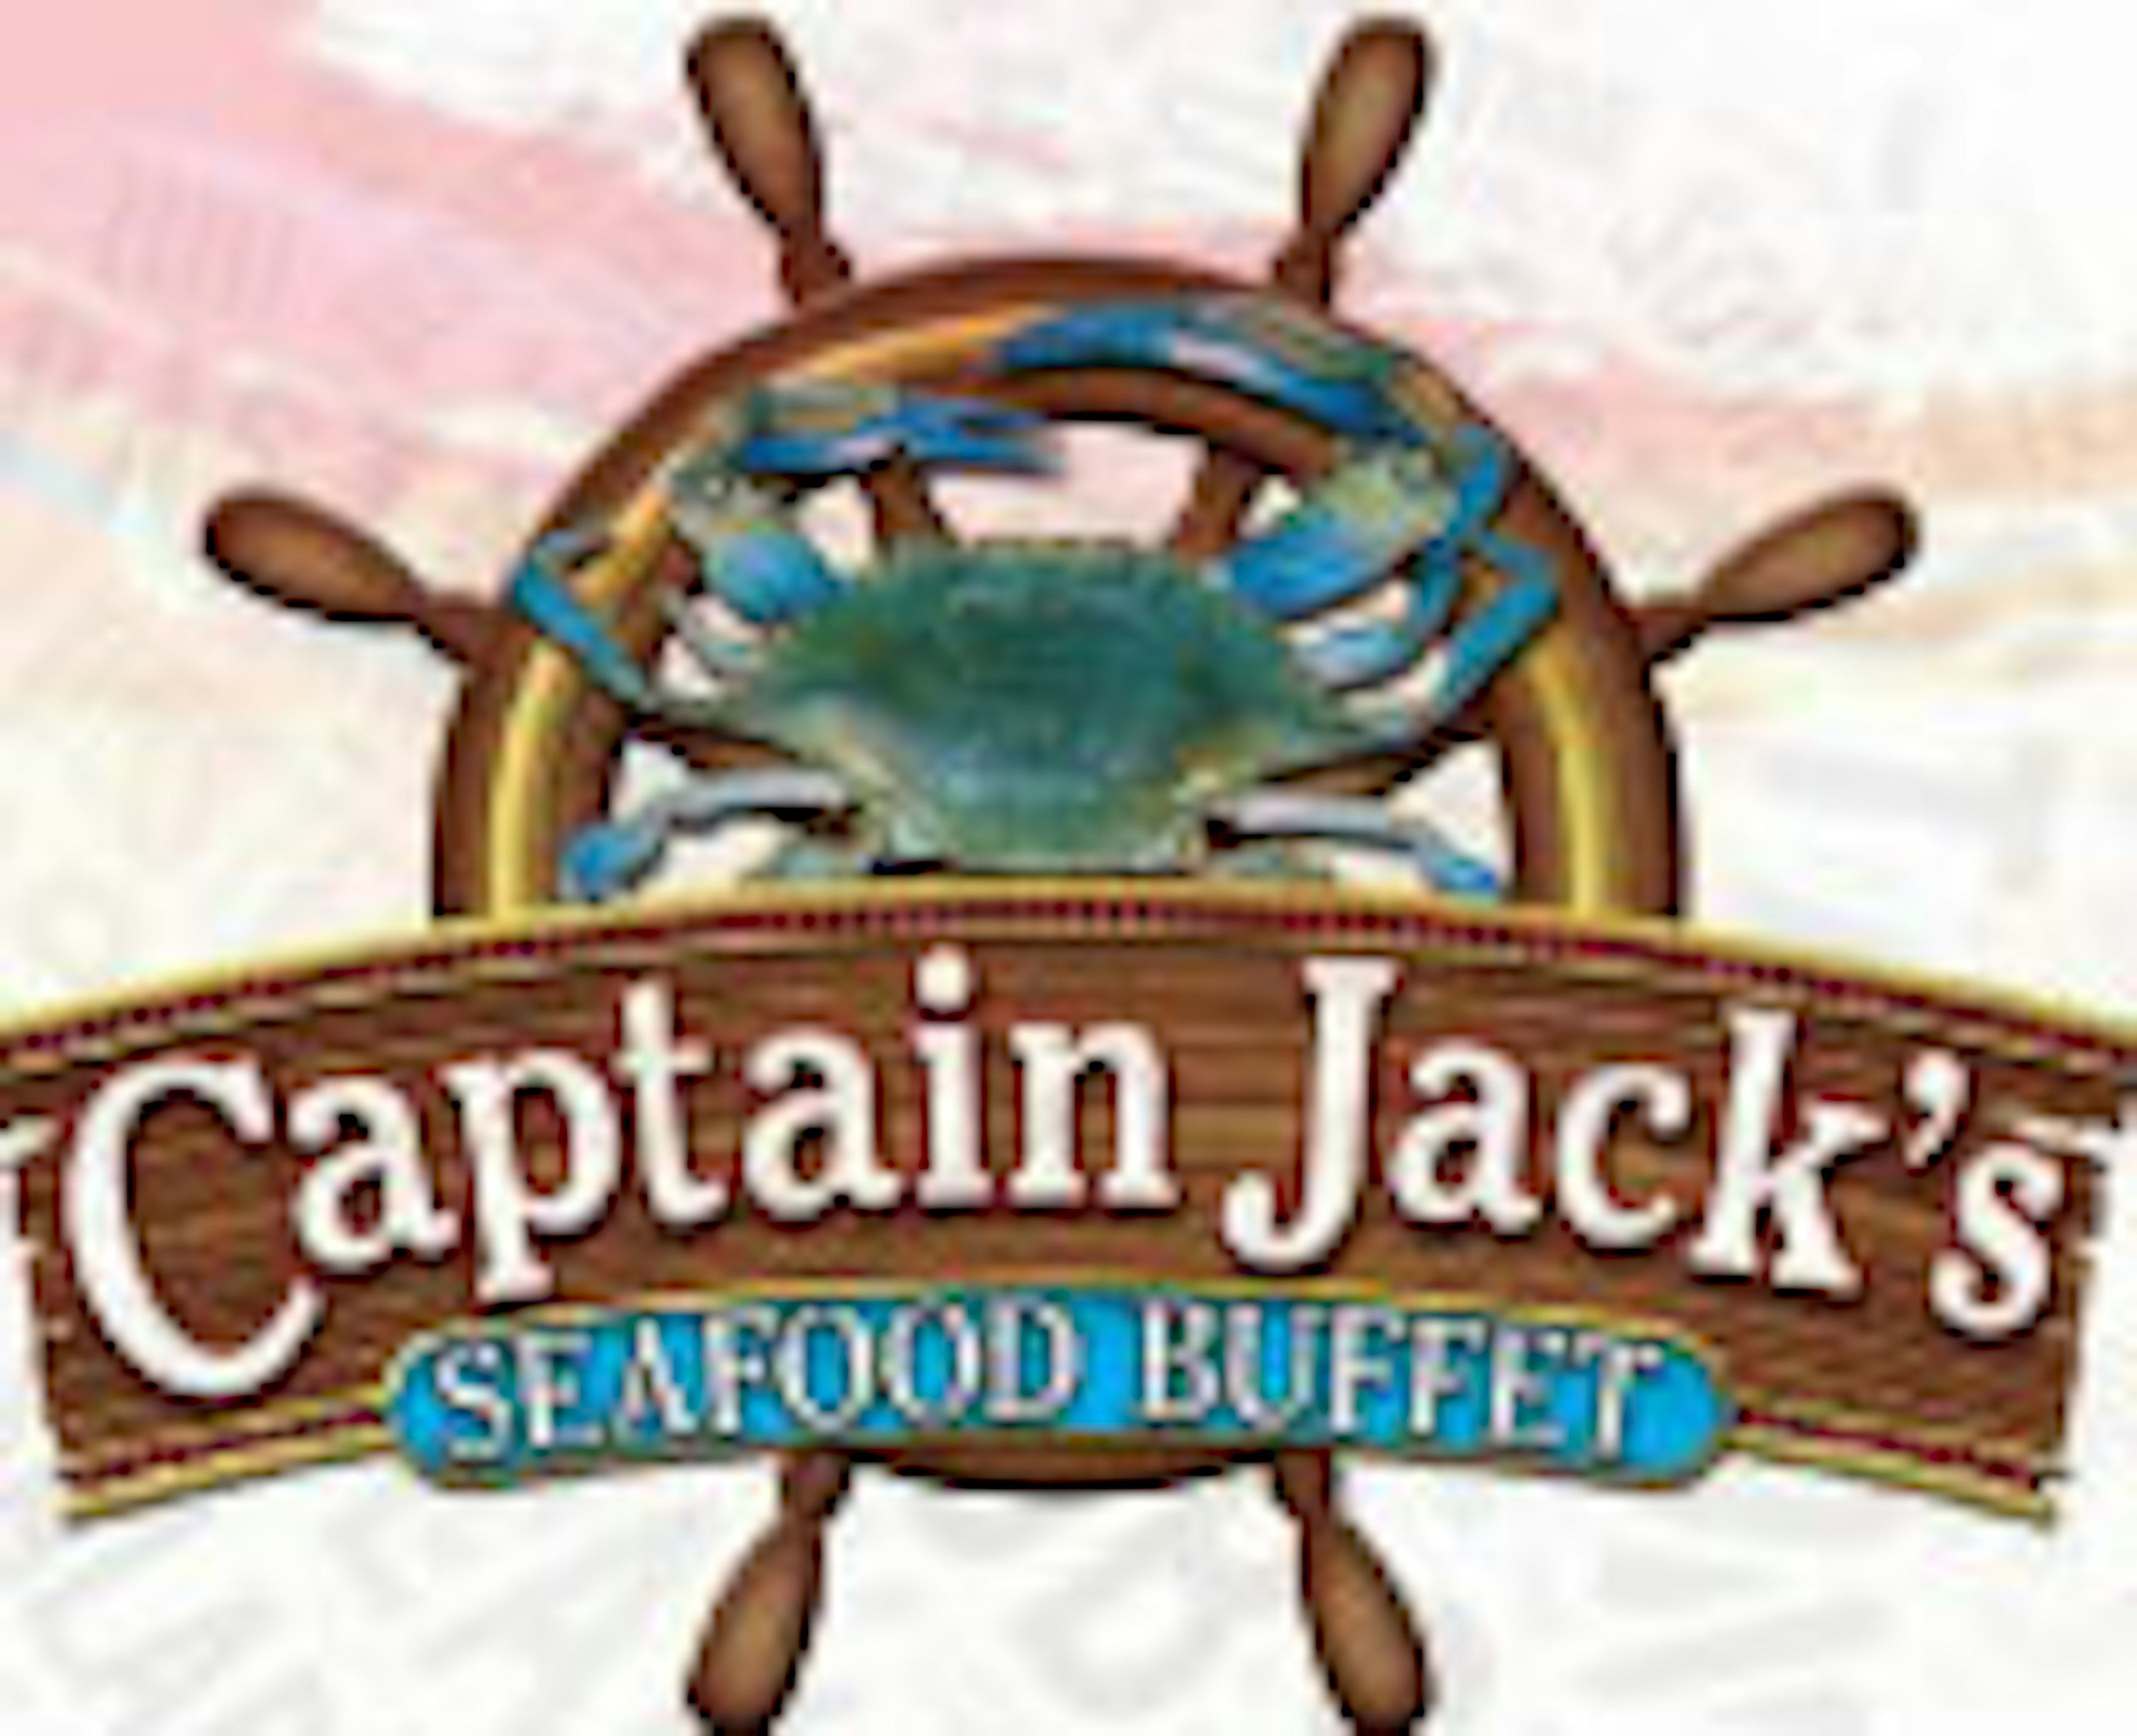 Captain Jack&#8217;s Seafood Buffet